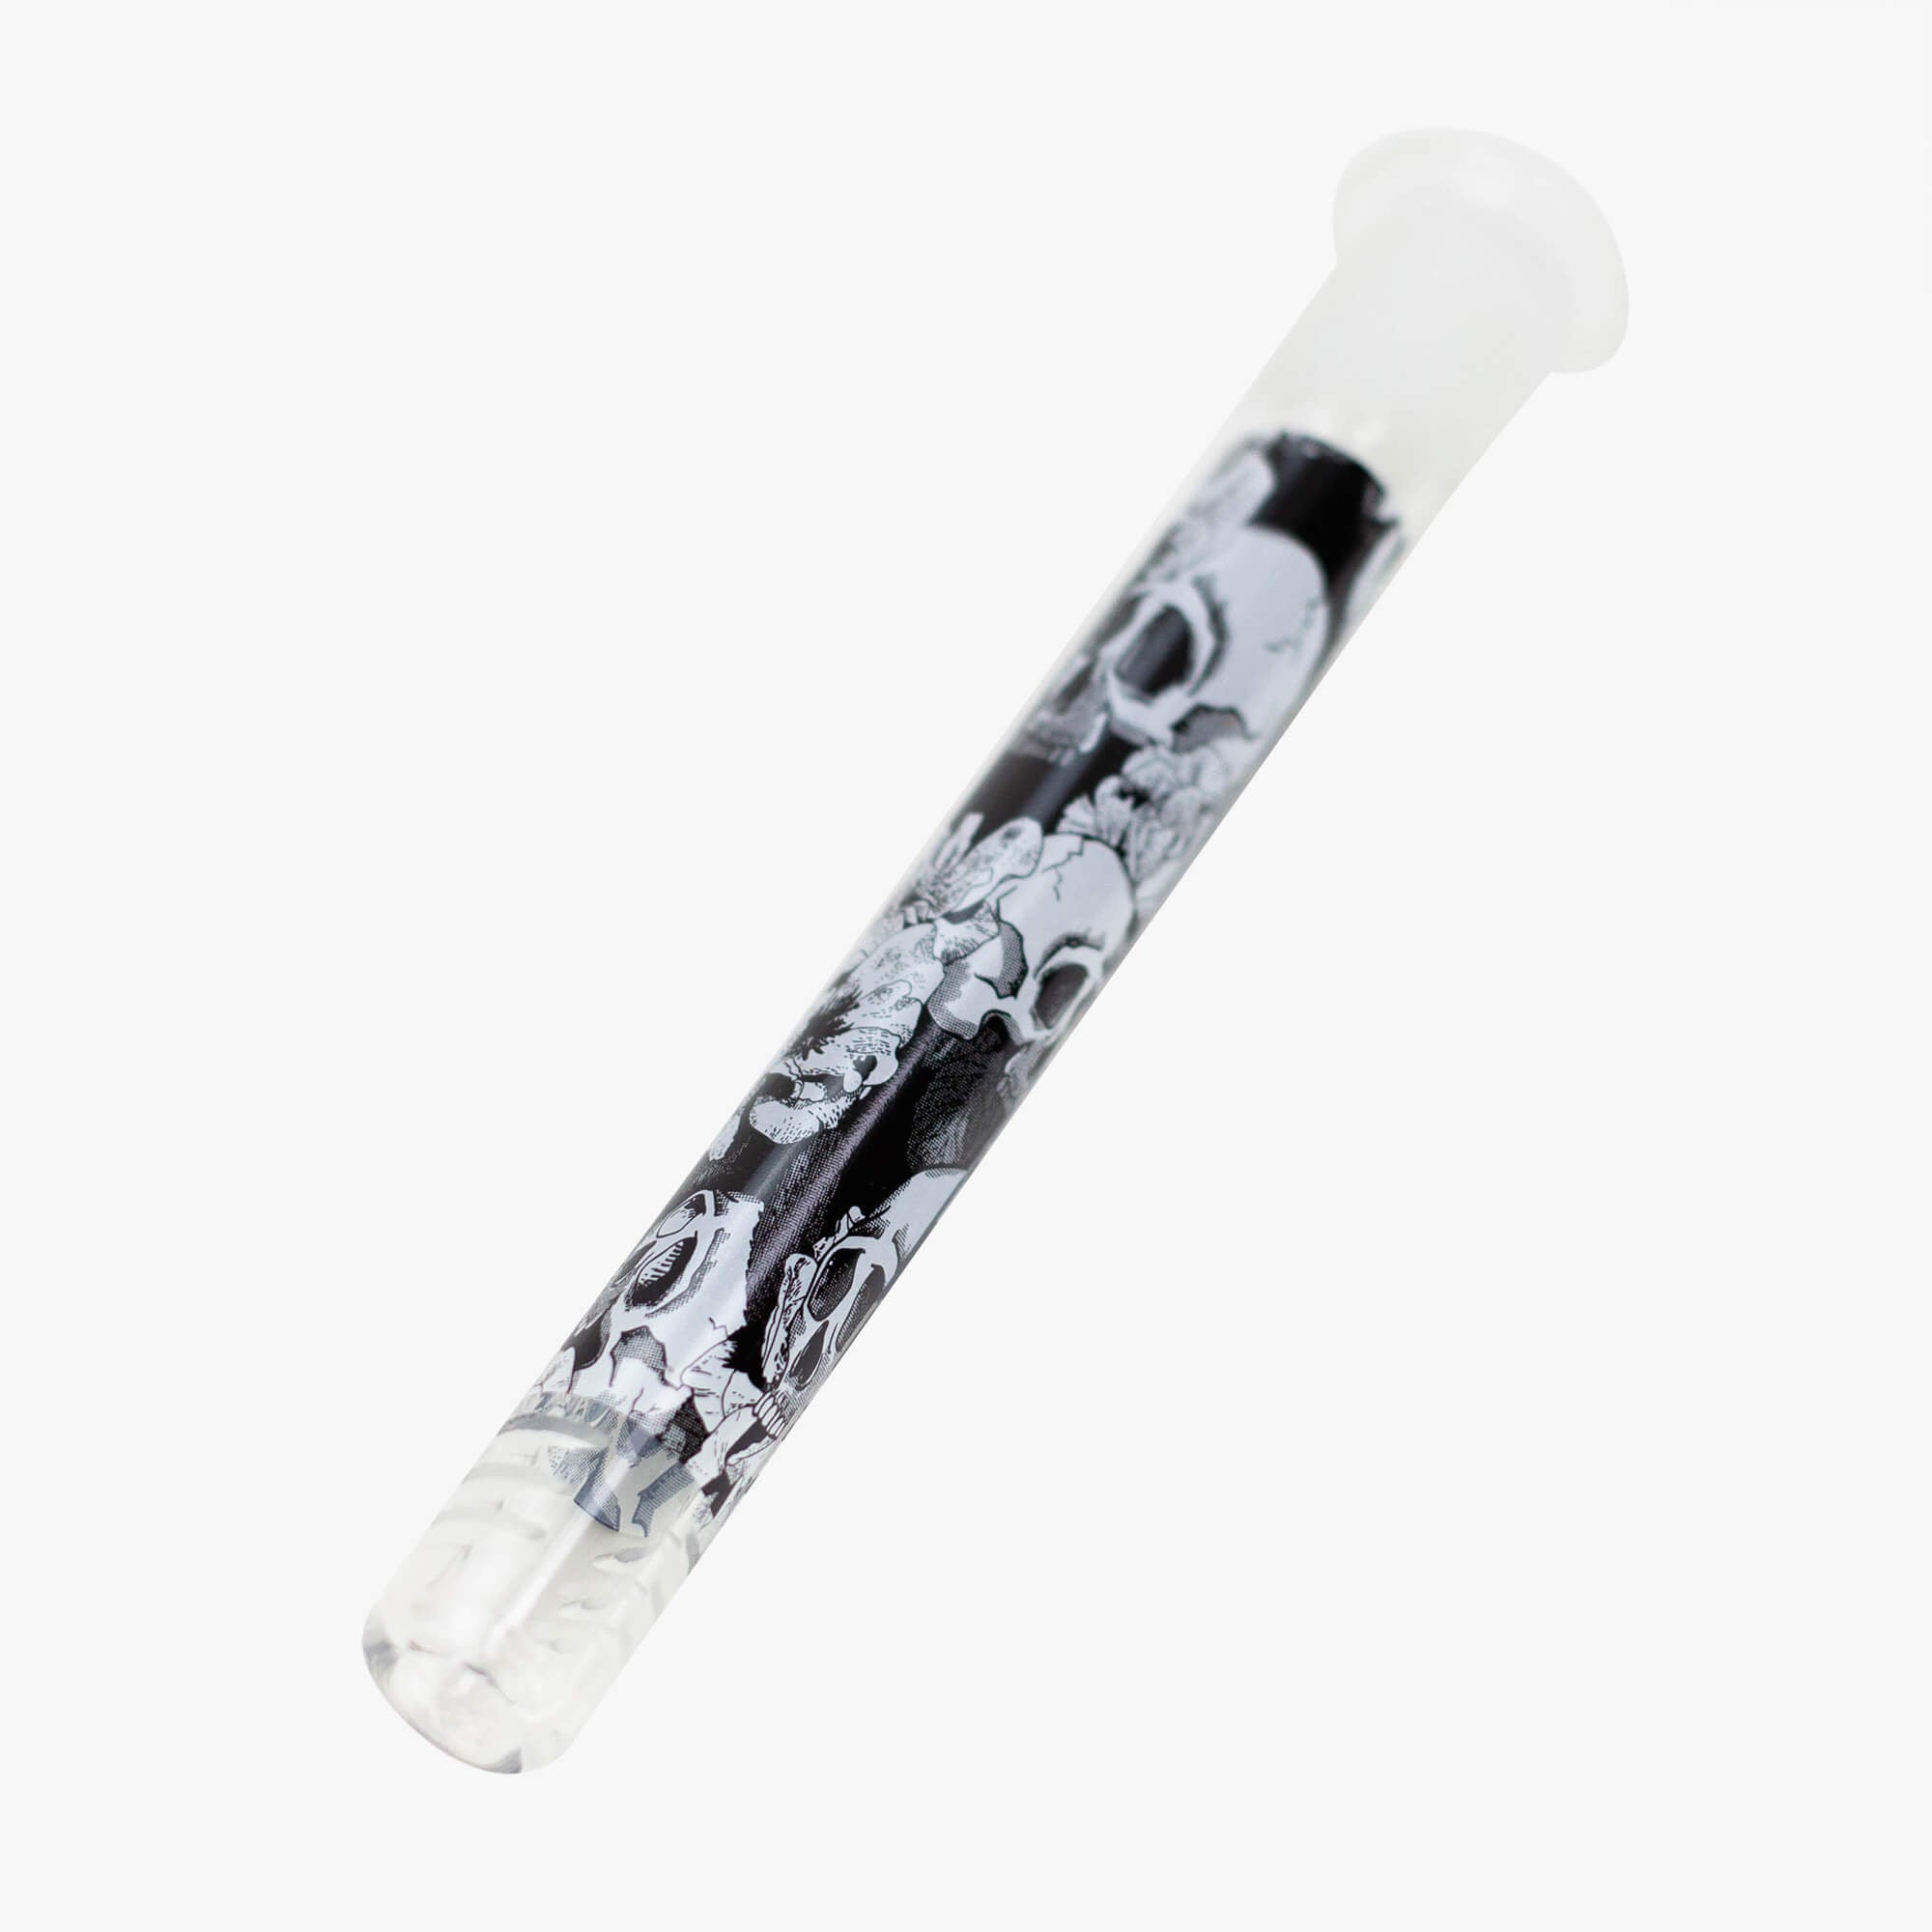 Graphic w/ Cubic Zirconia Decor Glass Beaker Bong 7mm